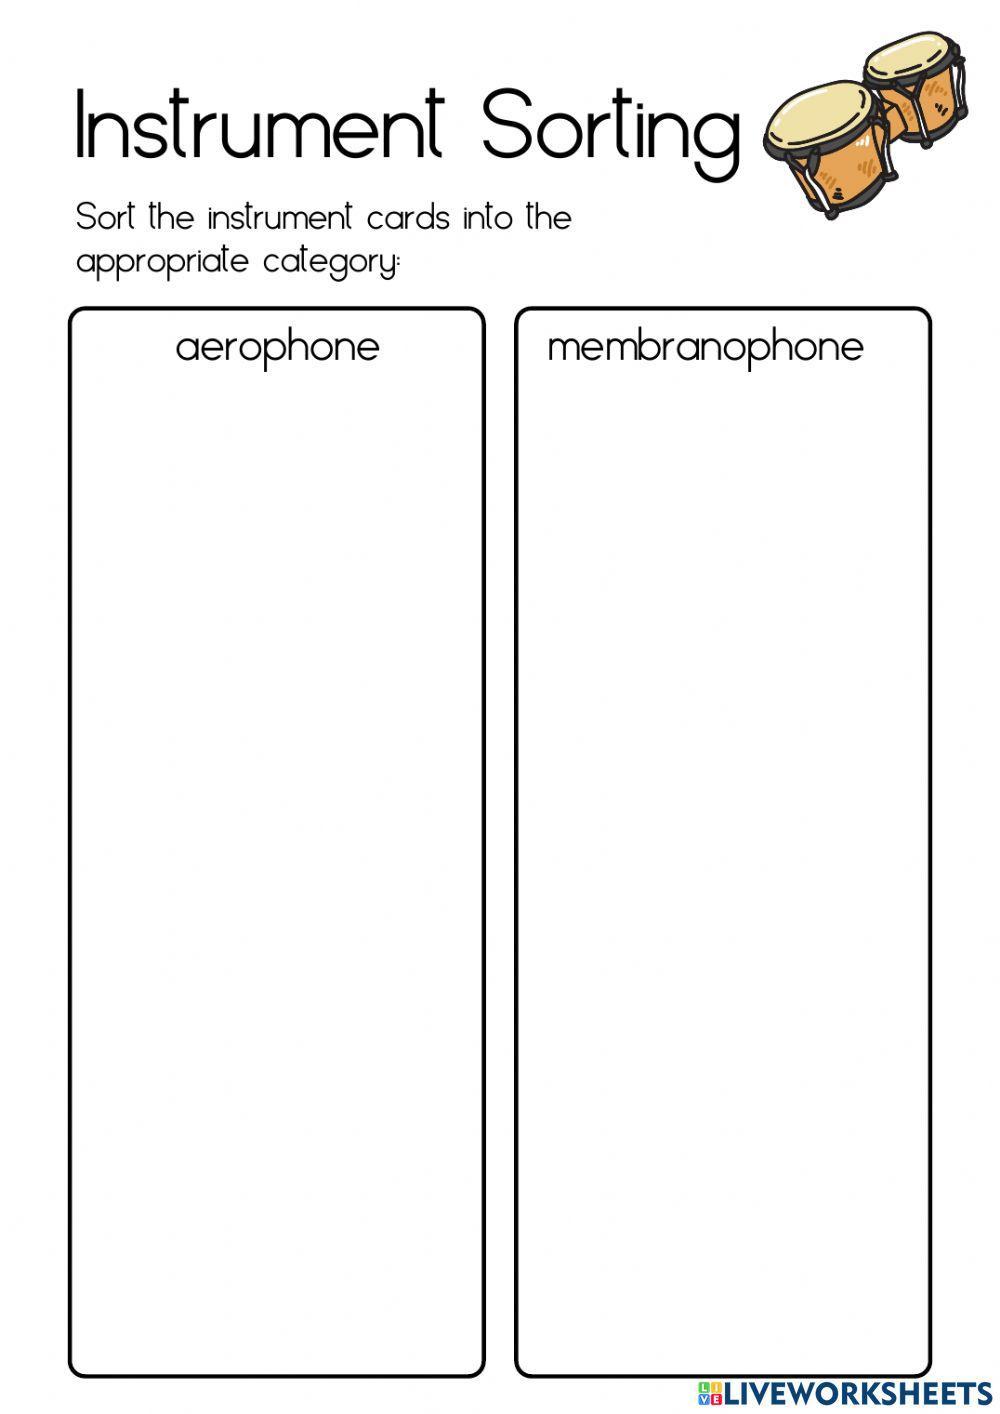 2Chordophone-ideophonos-aerophones-membranophones